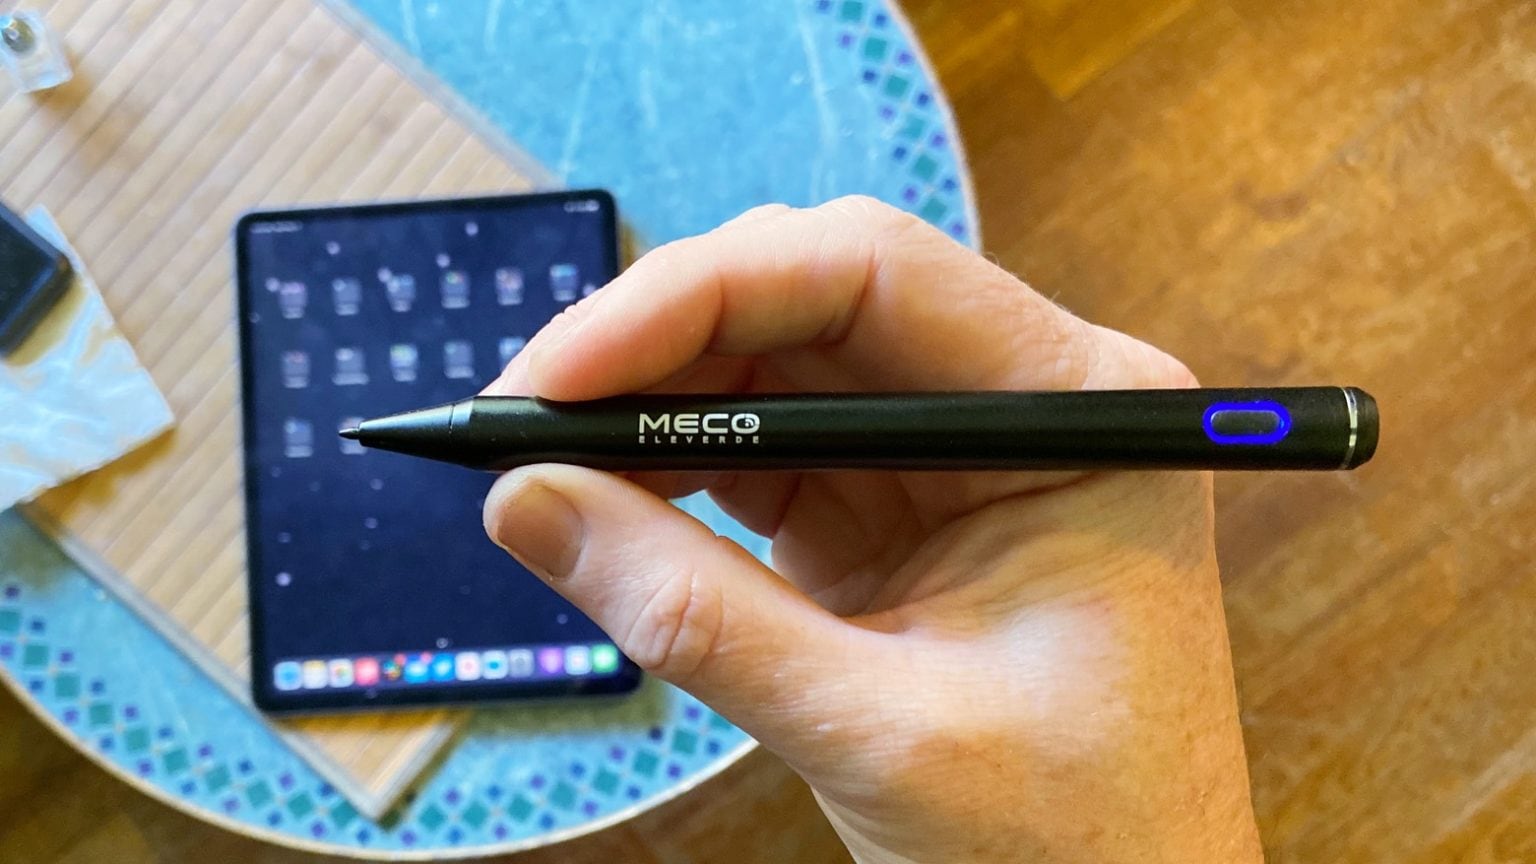 Meco Stylus Pen review